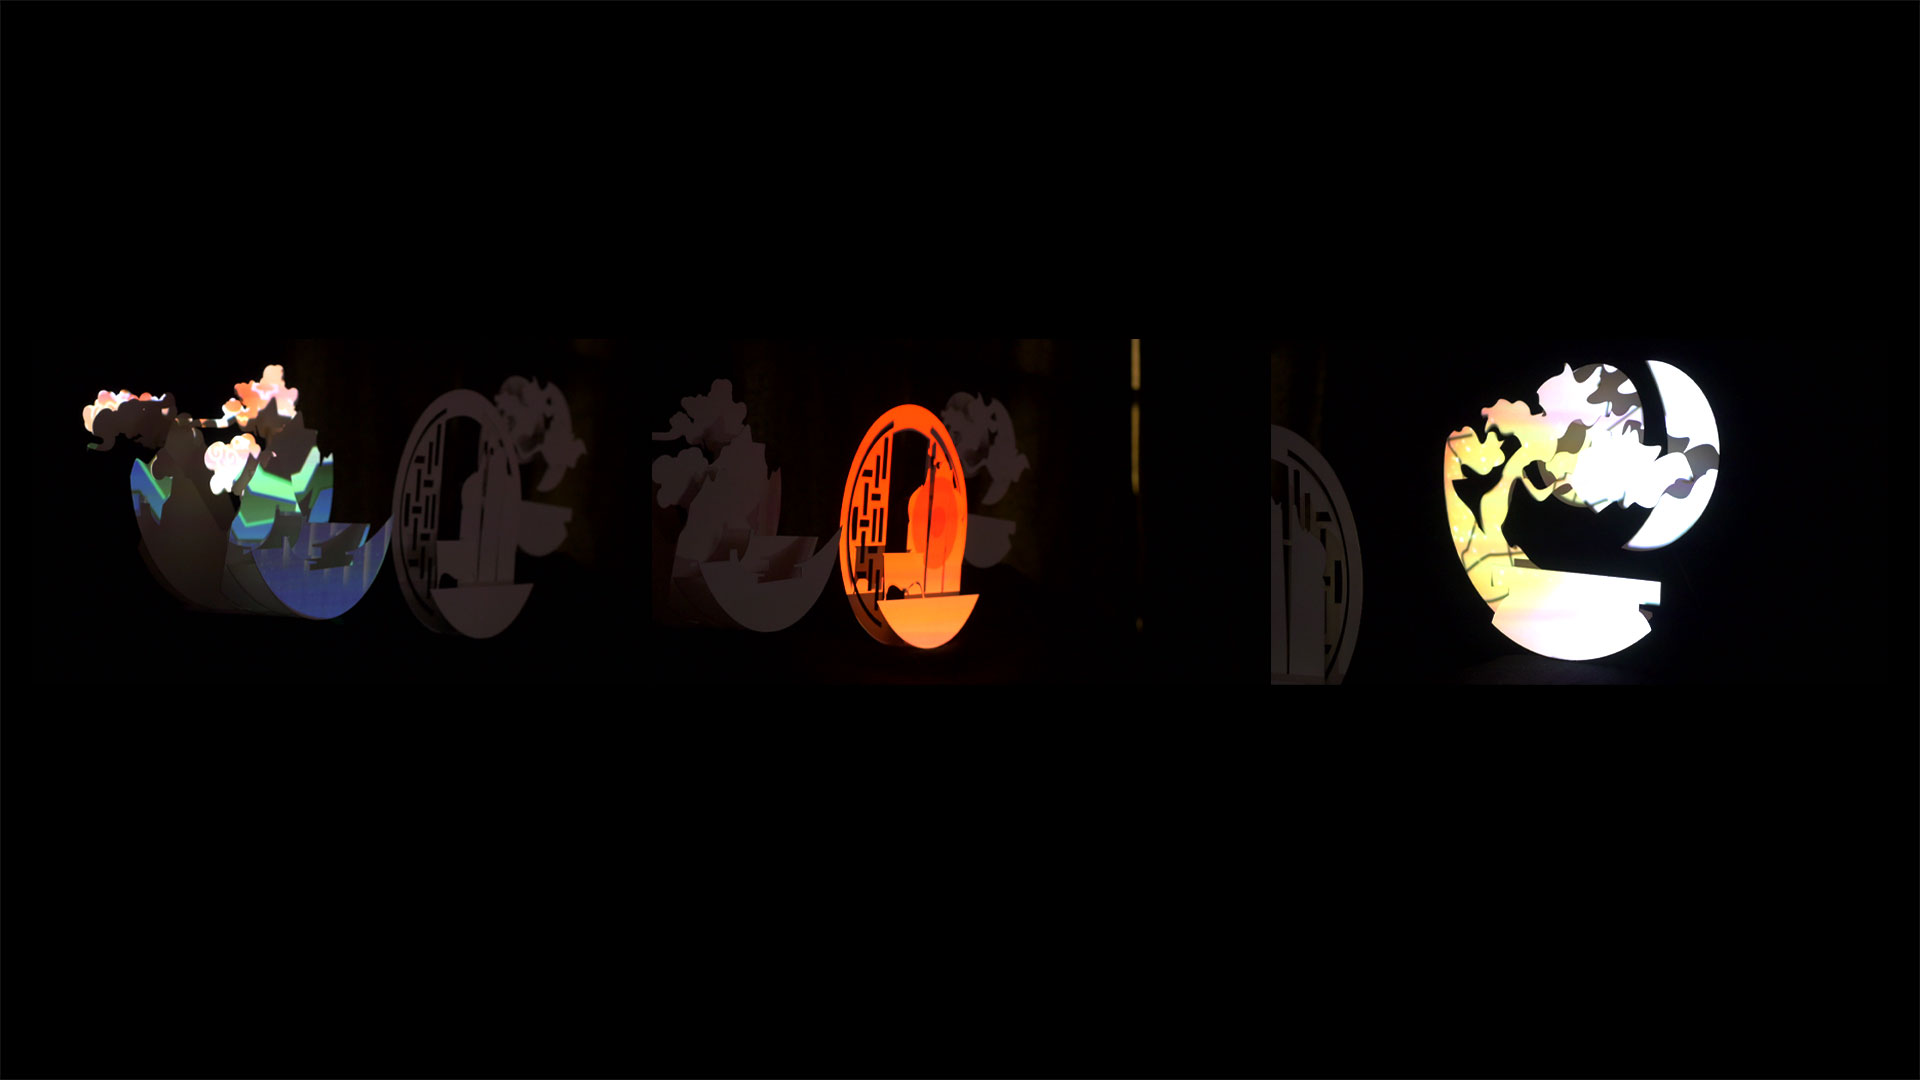 animation 2d mapping conte coreen frere lune soeur soleil laura francois